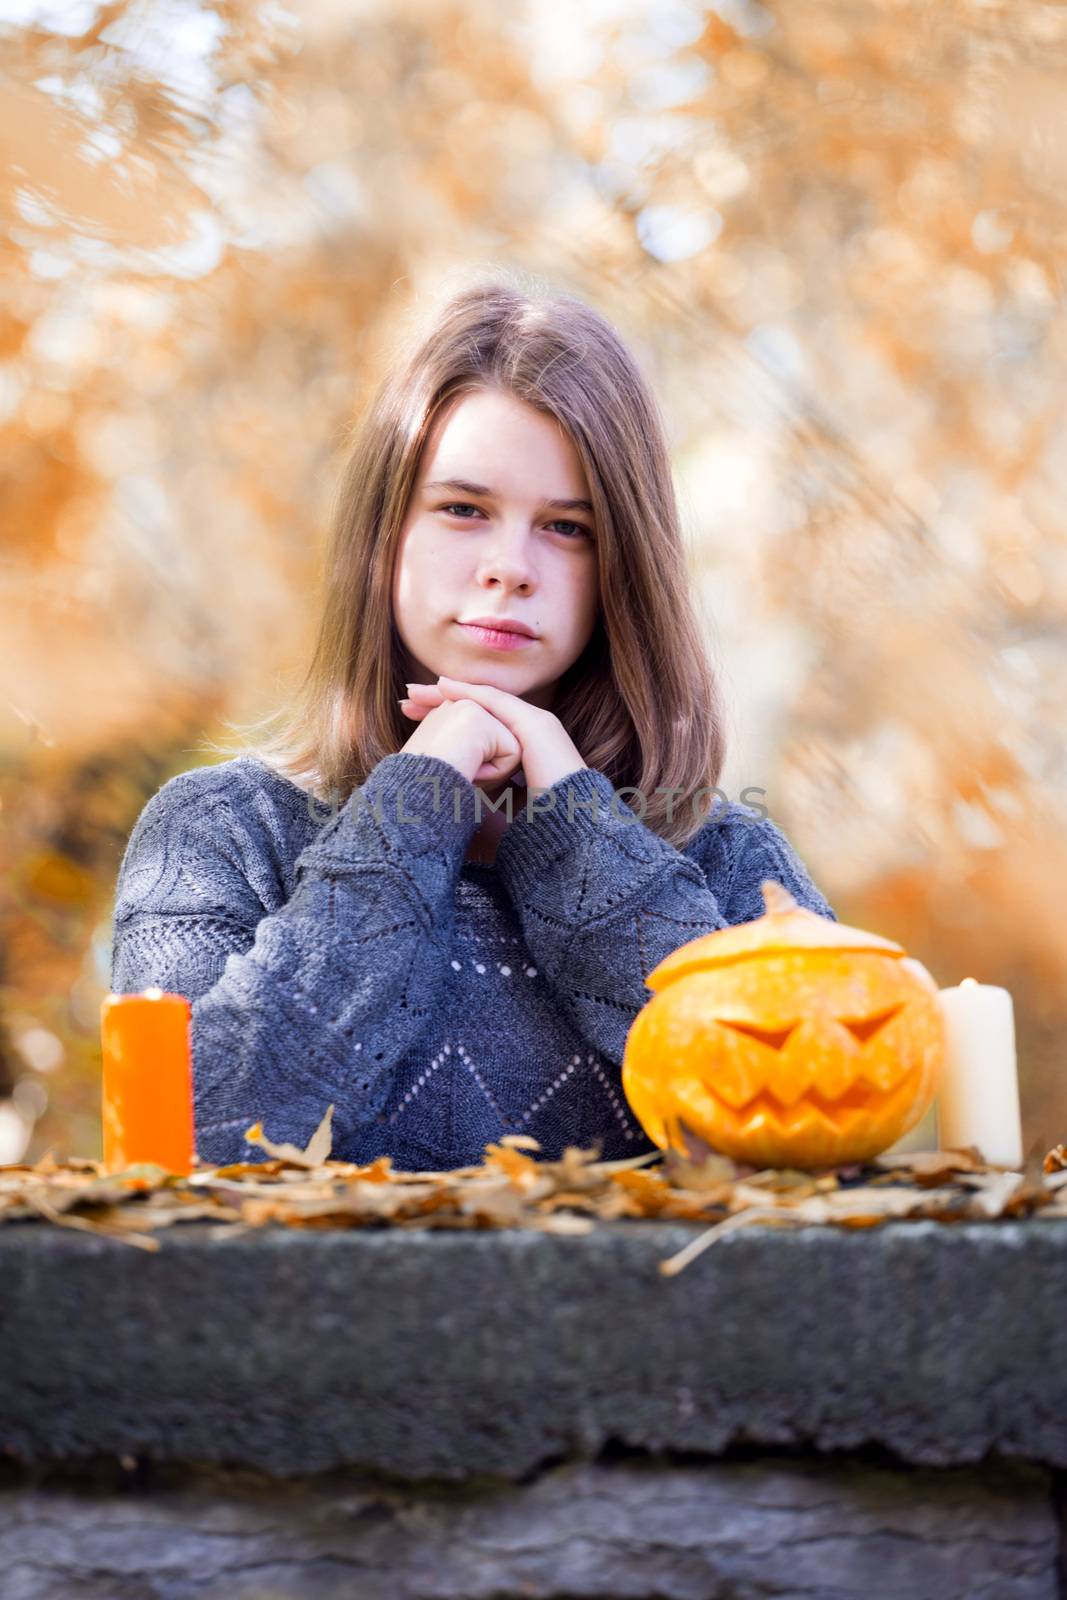 Girls with pumpkins on Halloween by destillat